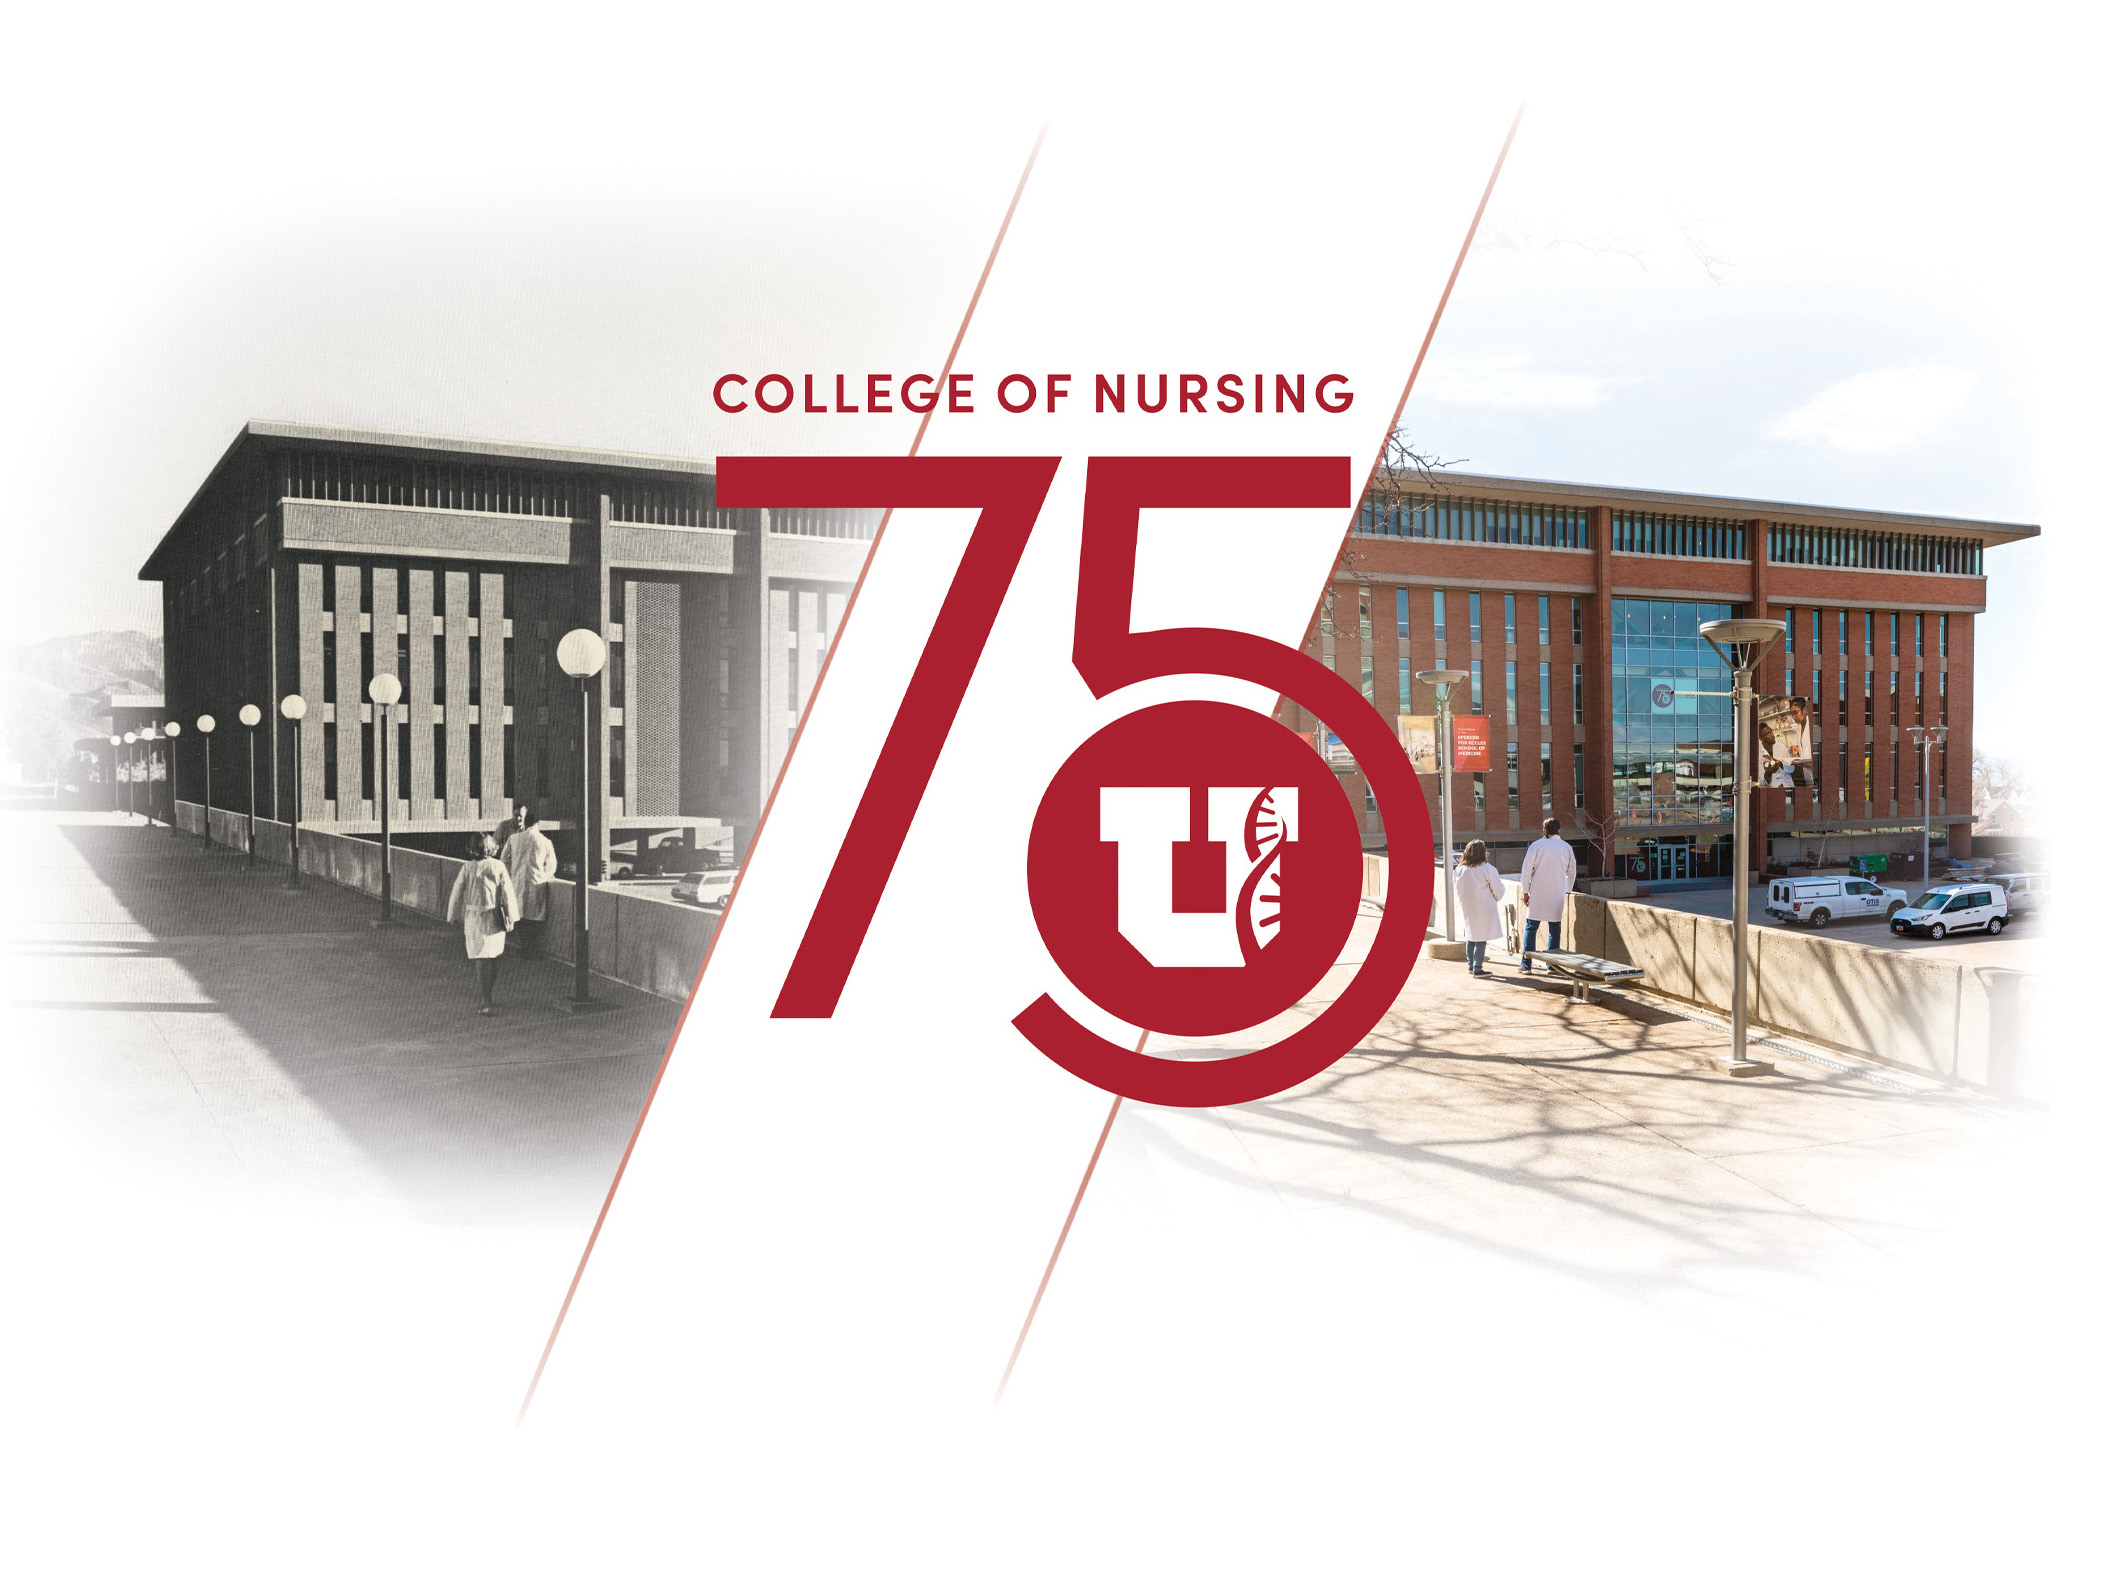 College of Nursing 75 years